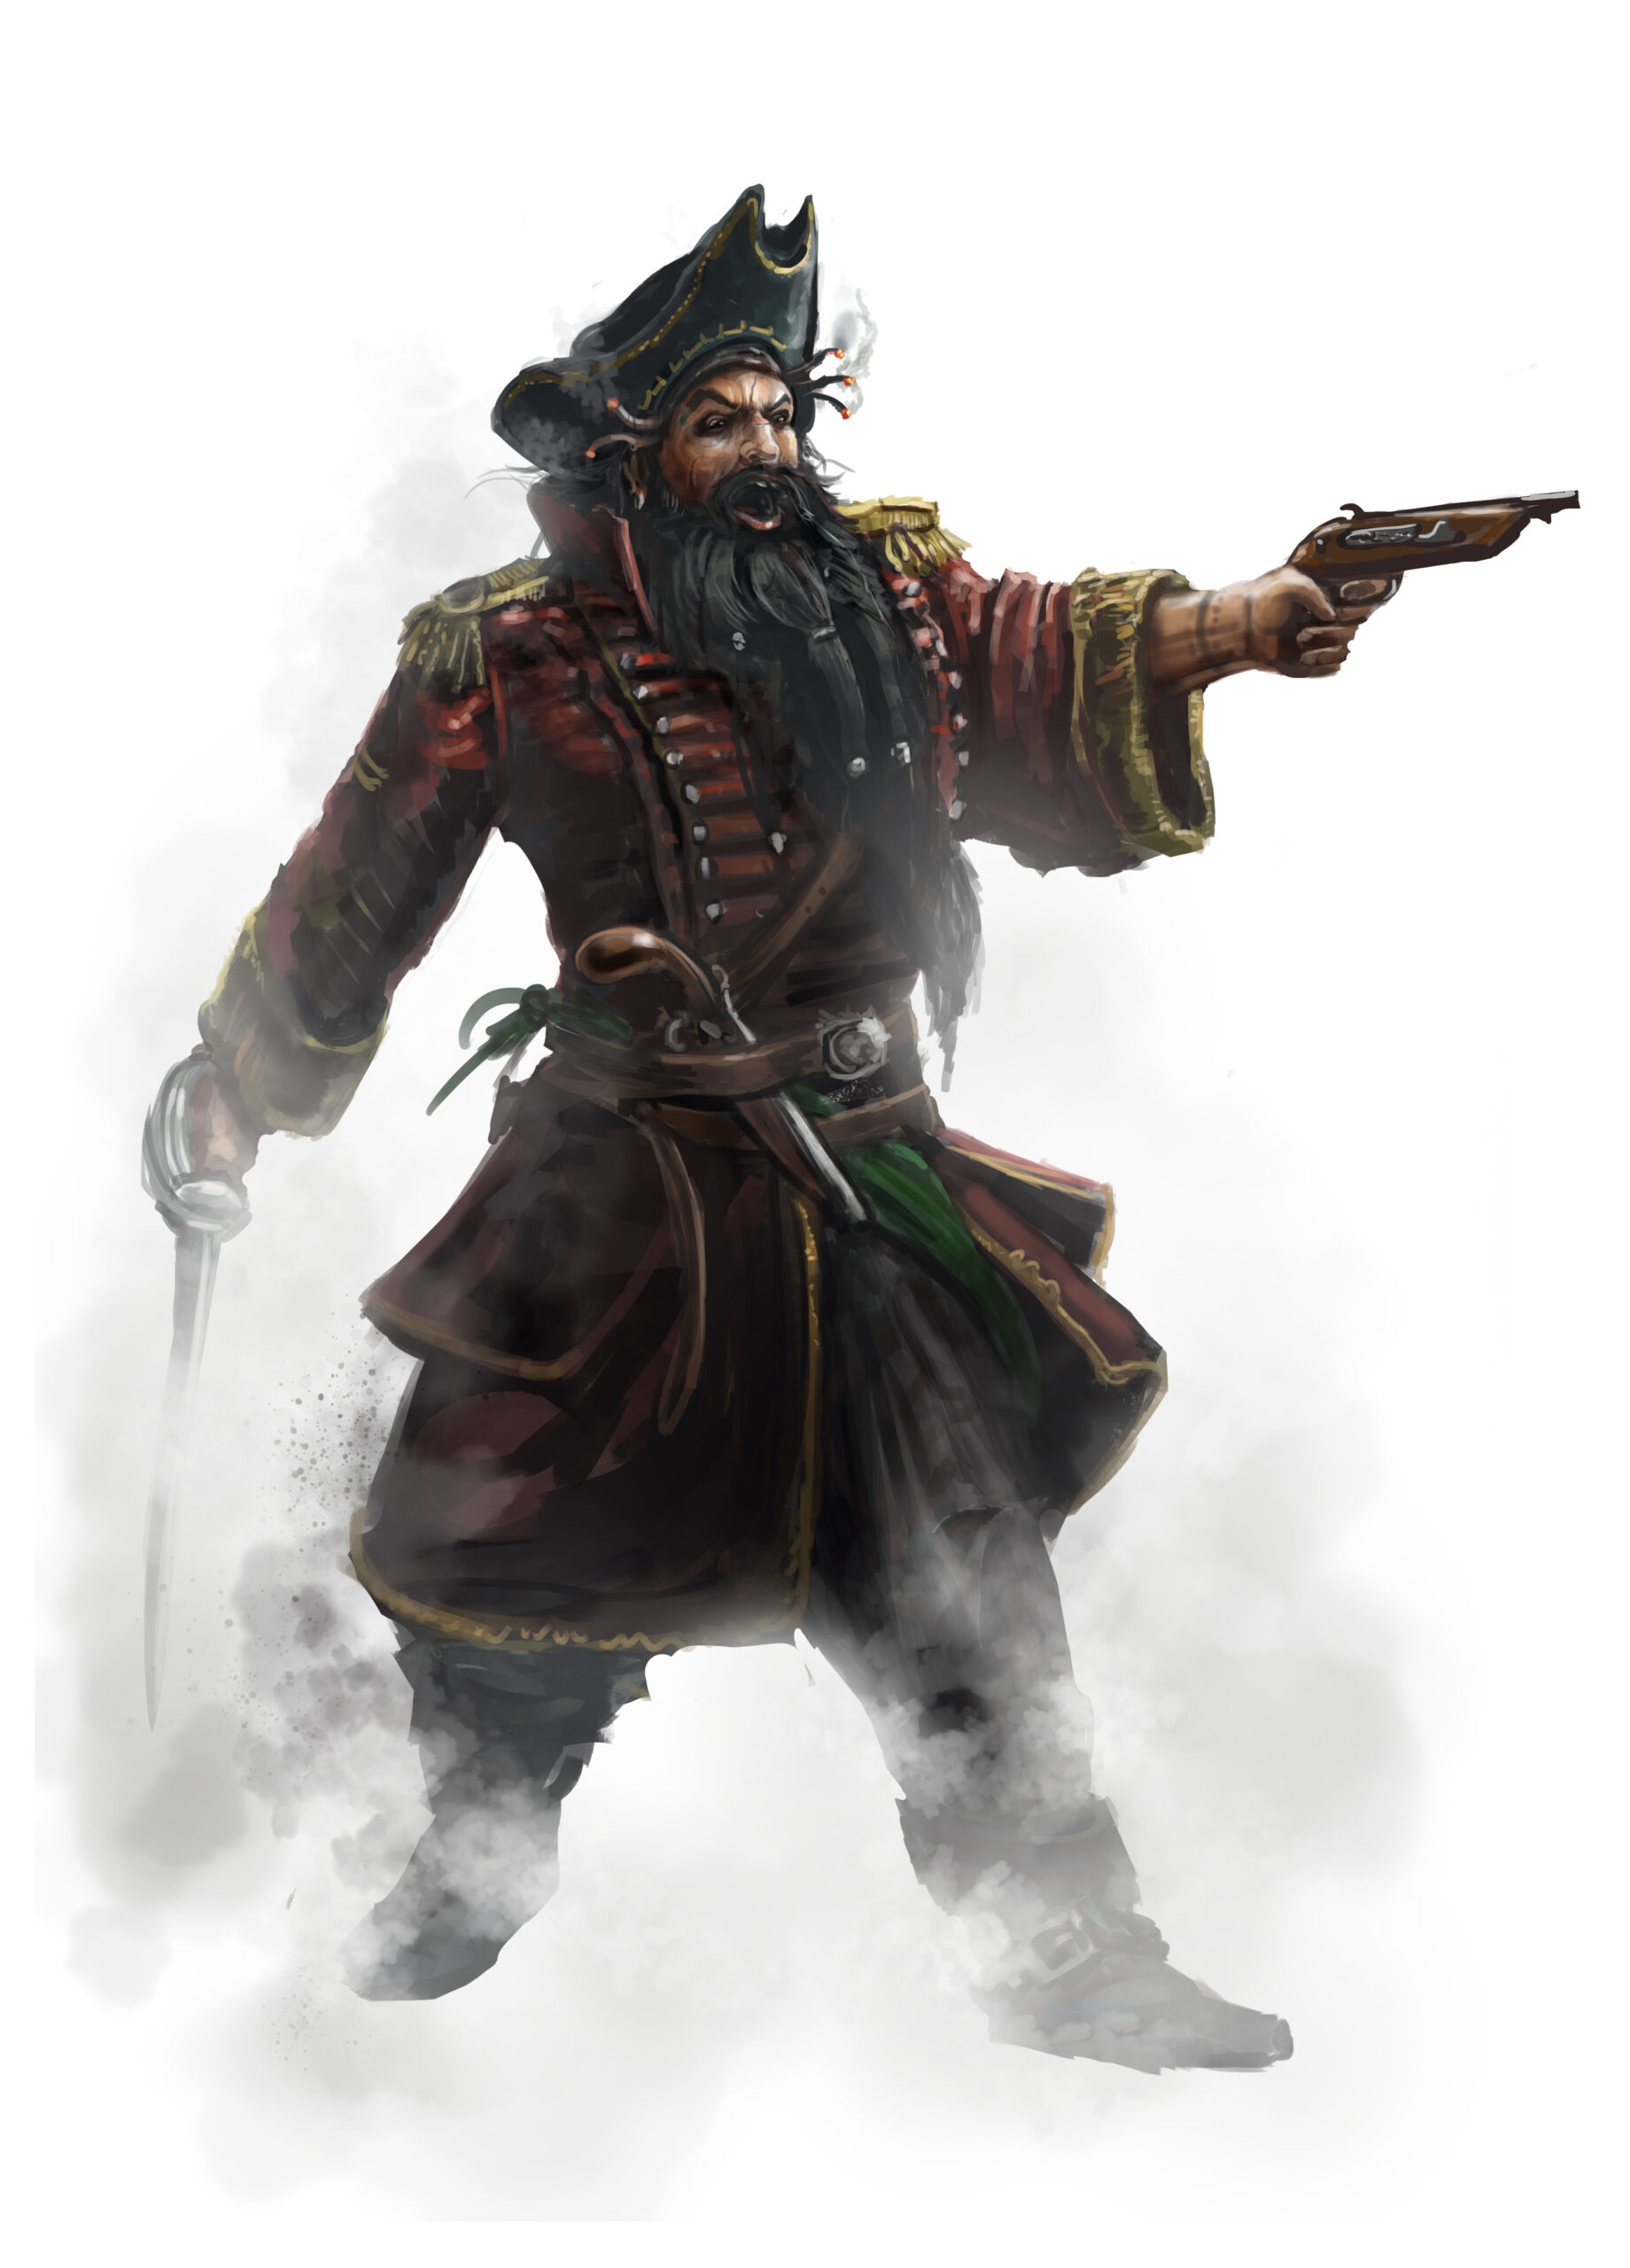 Blackbeard pirate art. Fantasy pirate. Edward Teach firing a gun